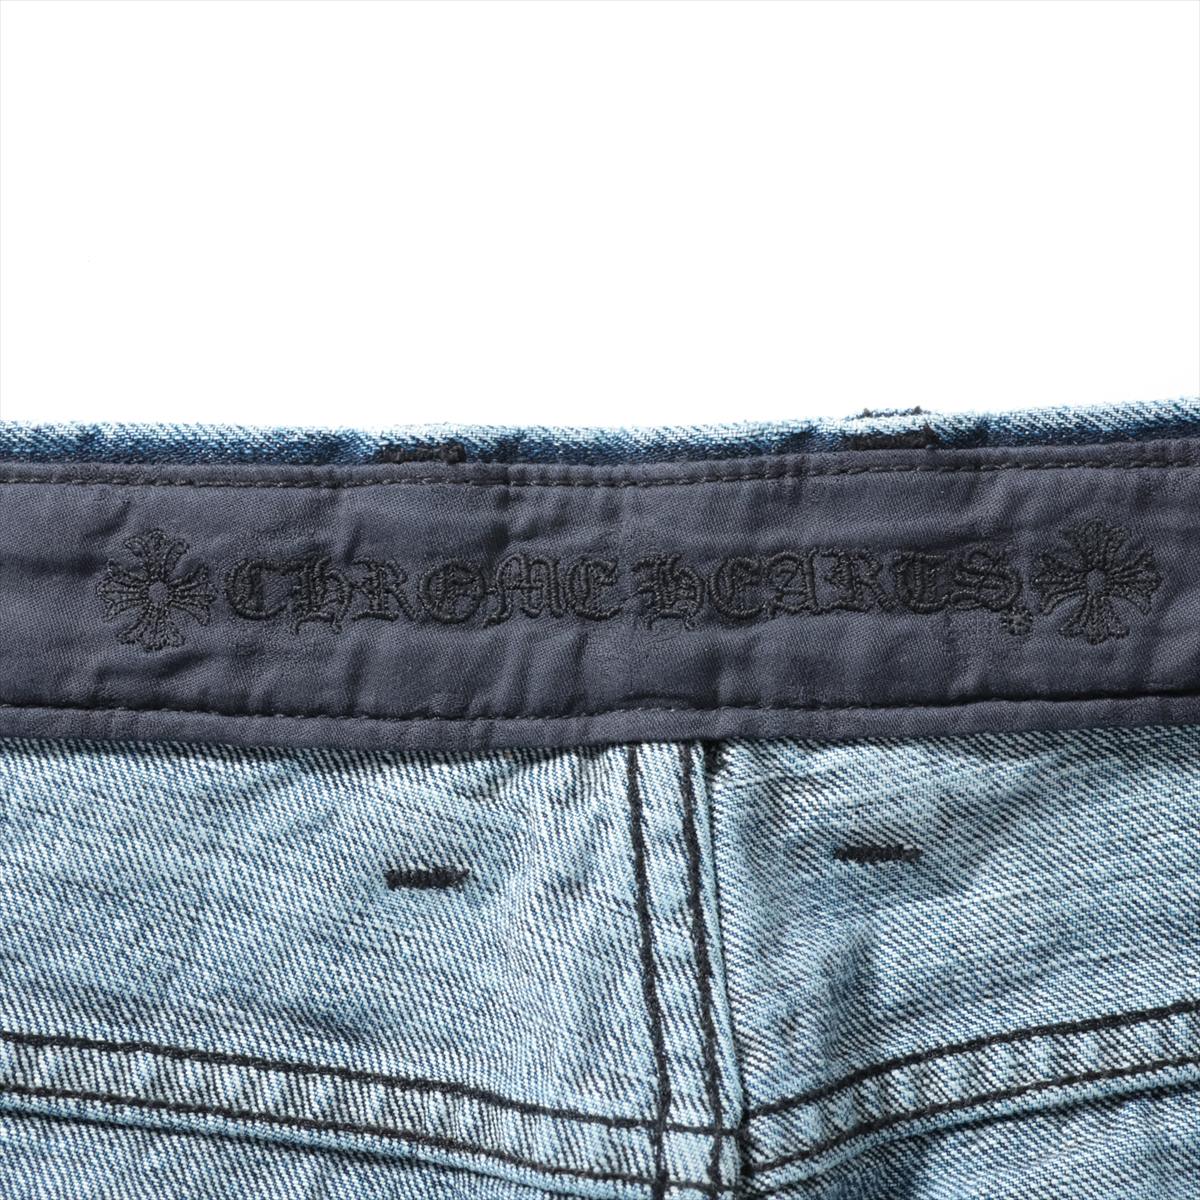 Chrome Hearts Denim Pants Cotton size 33 Indigo cross leather patch Flerknee